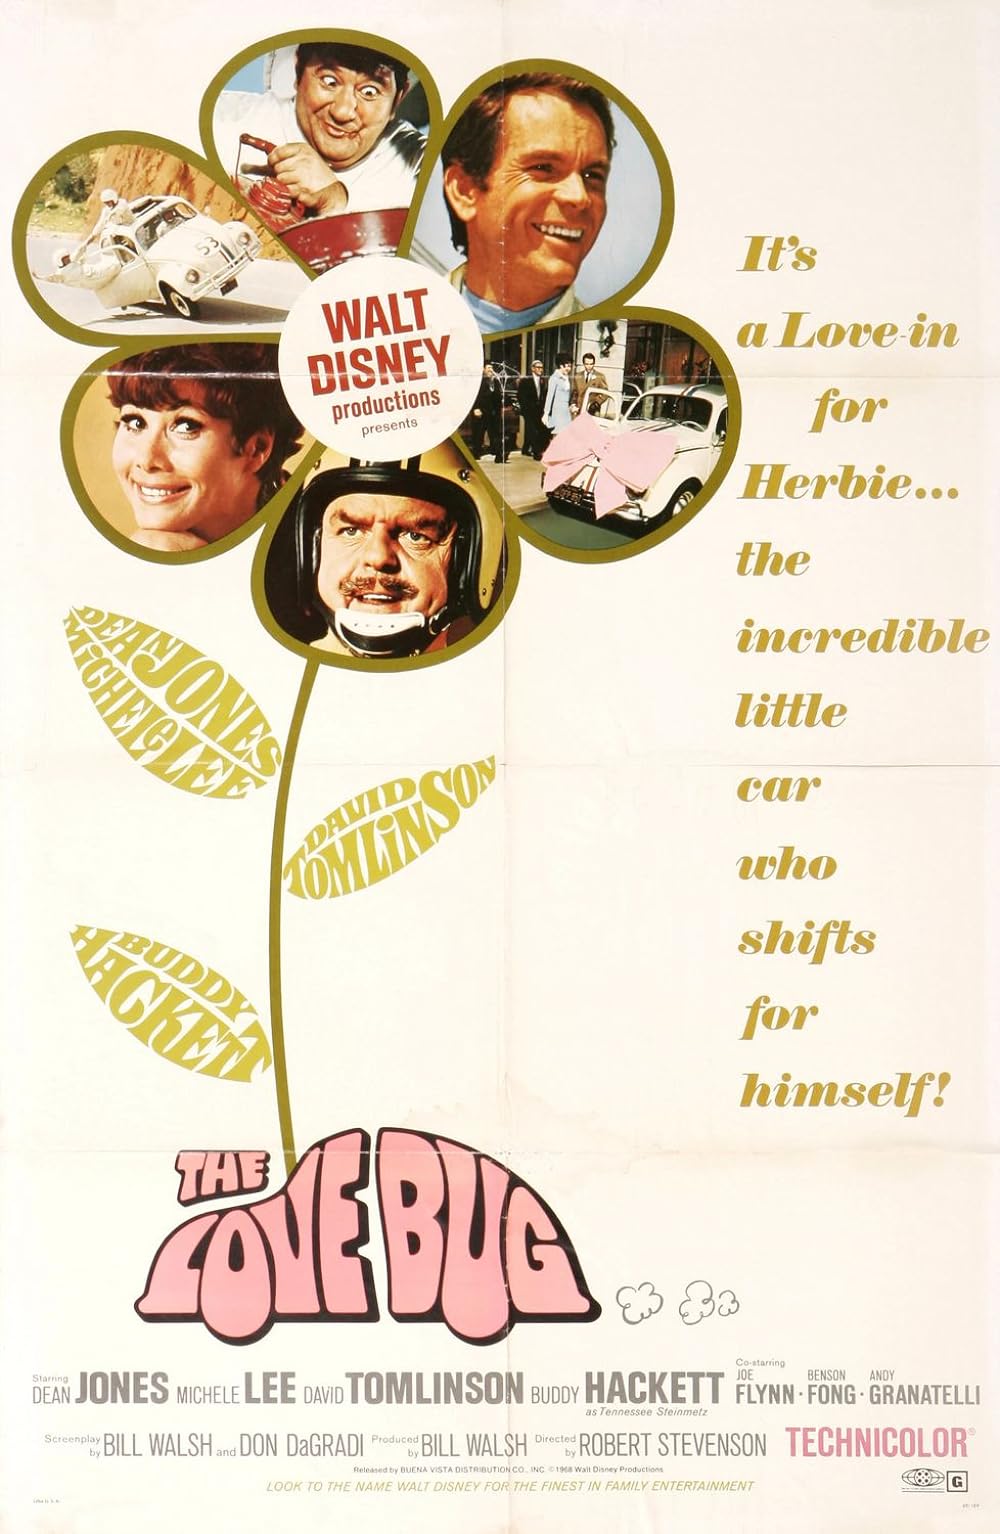 The Love Bug (1969)